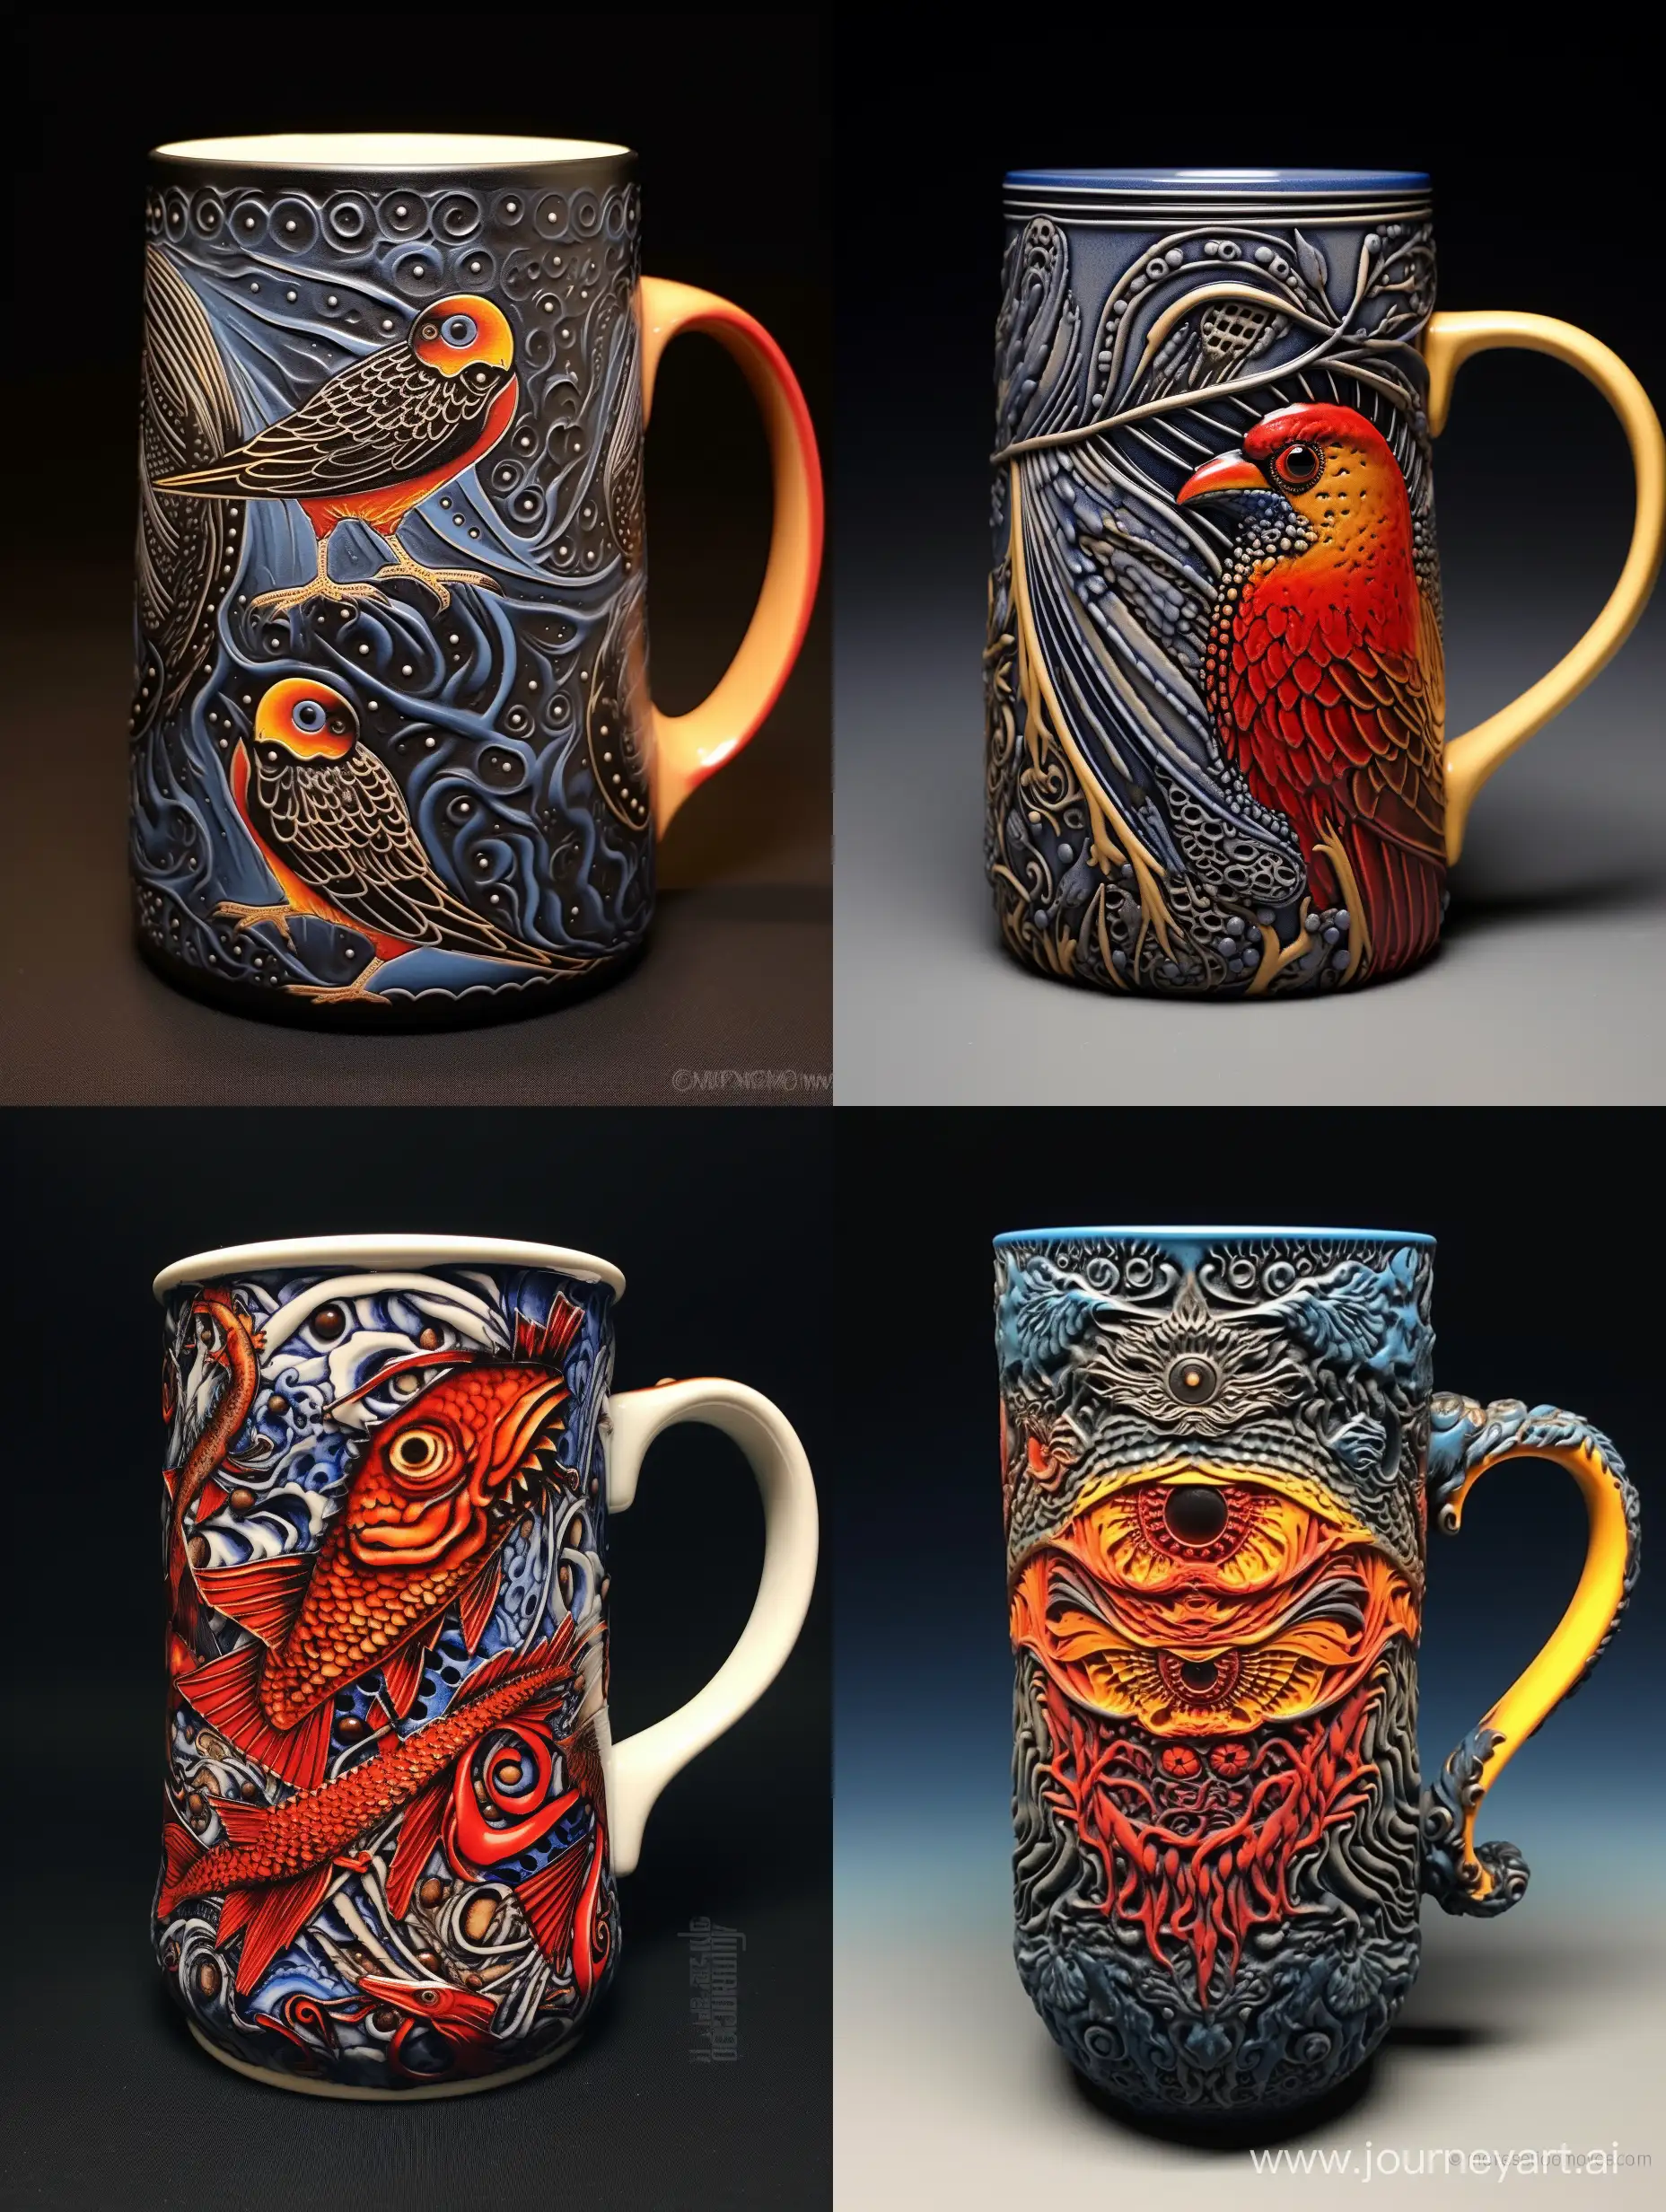 Exquisite-Toynkite-Ceramic-Mug-with-Birds-Fish-and-Animals-Motifs